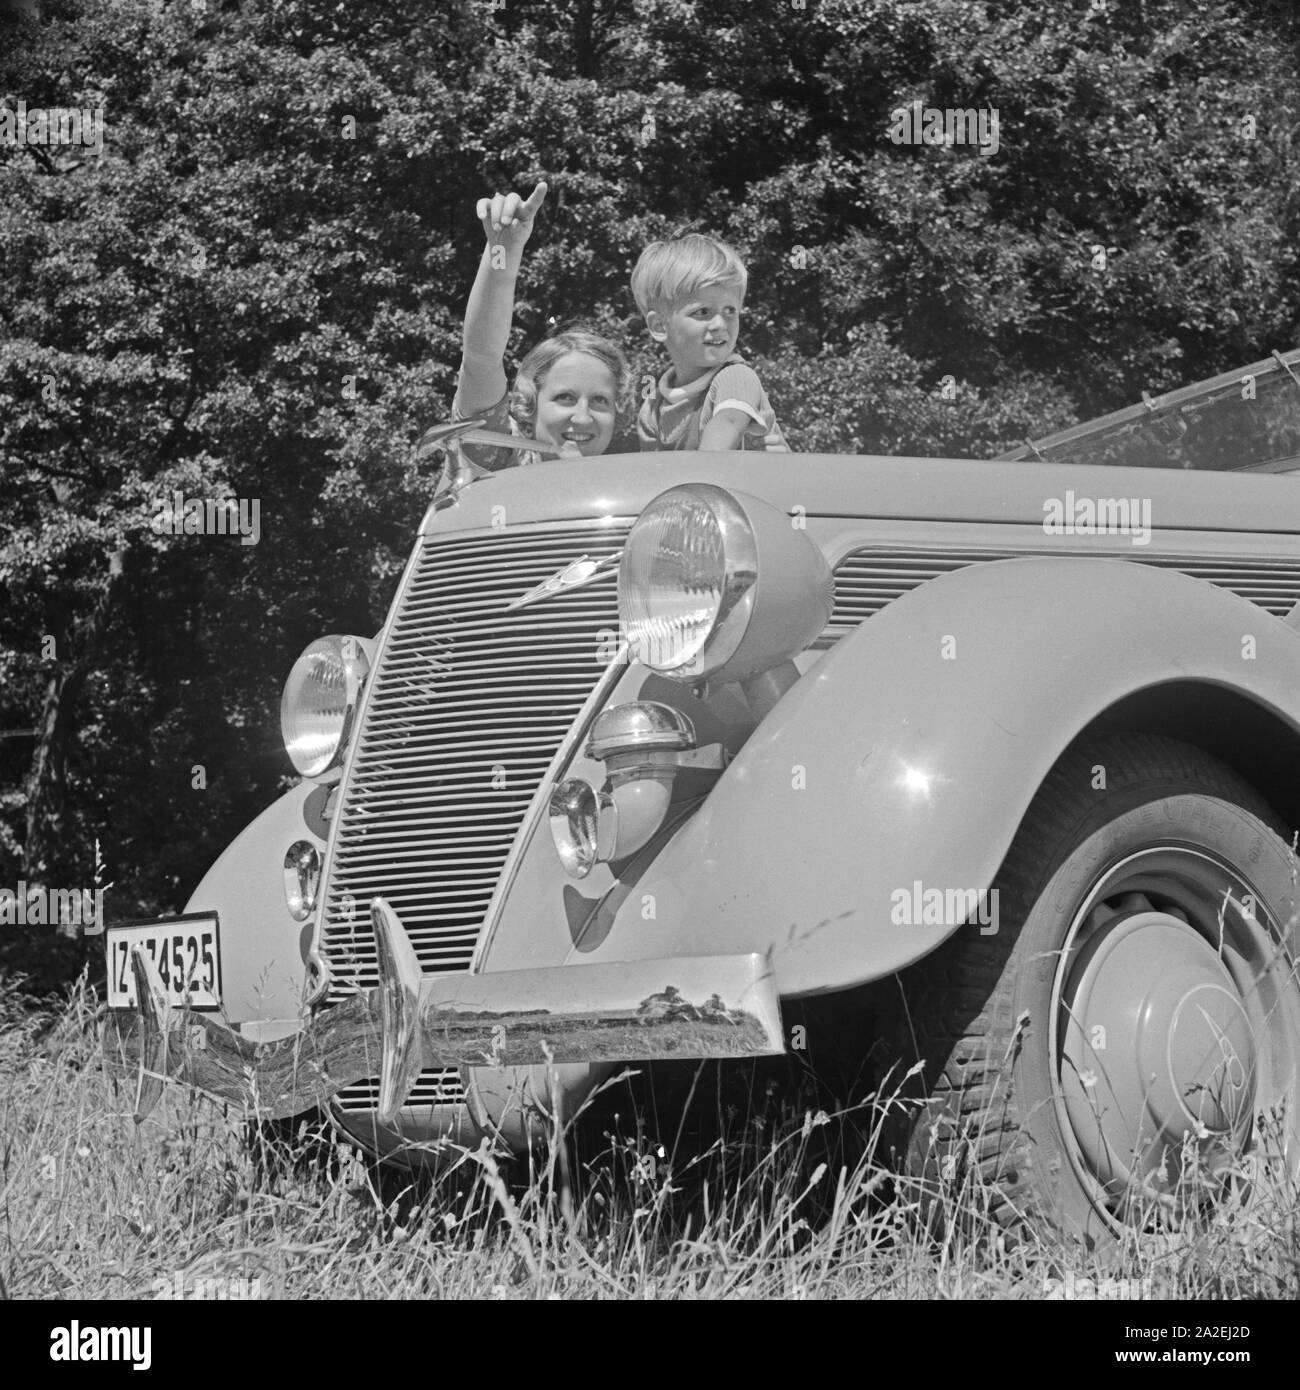 https://c8.alamy.com/comp/2A2EJ2D/eine-junge-frau-und-ein-junge-an-der-khlerhaube-eines-automobils-deutschland-1930er-jahre-a-young-woman-and-a-boy-at-the-bonnet-of-a-car-germany-1930s-2A2EJ2D.jpg